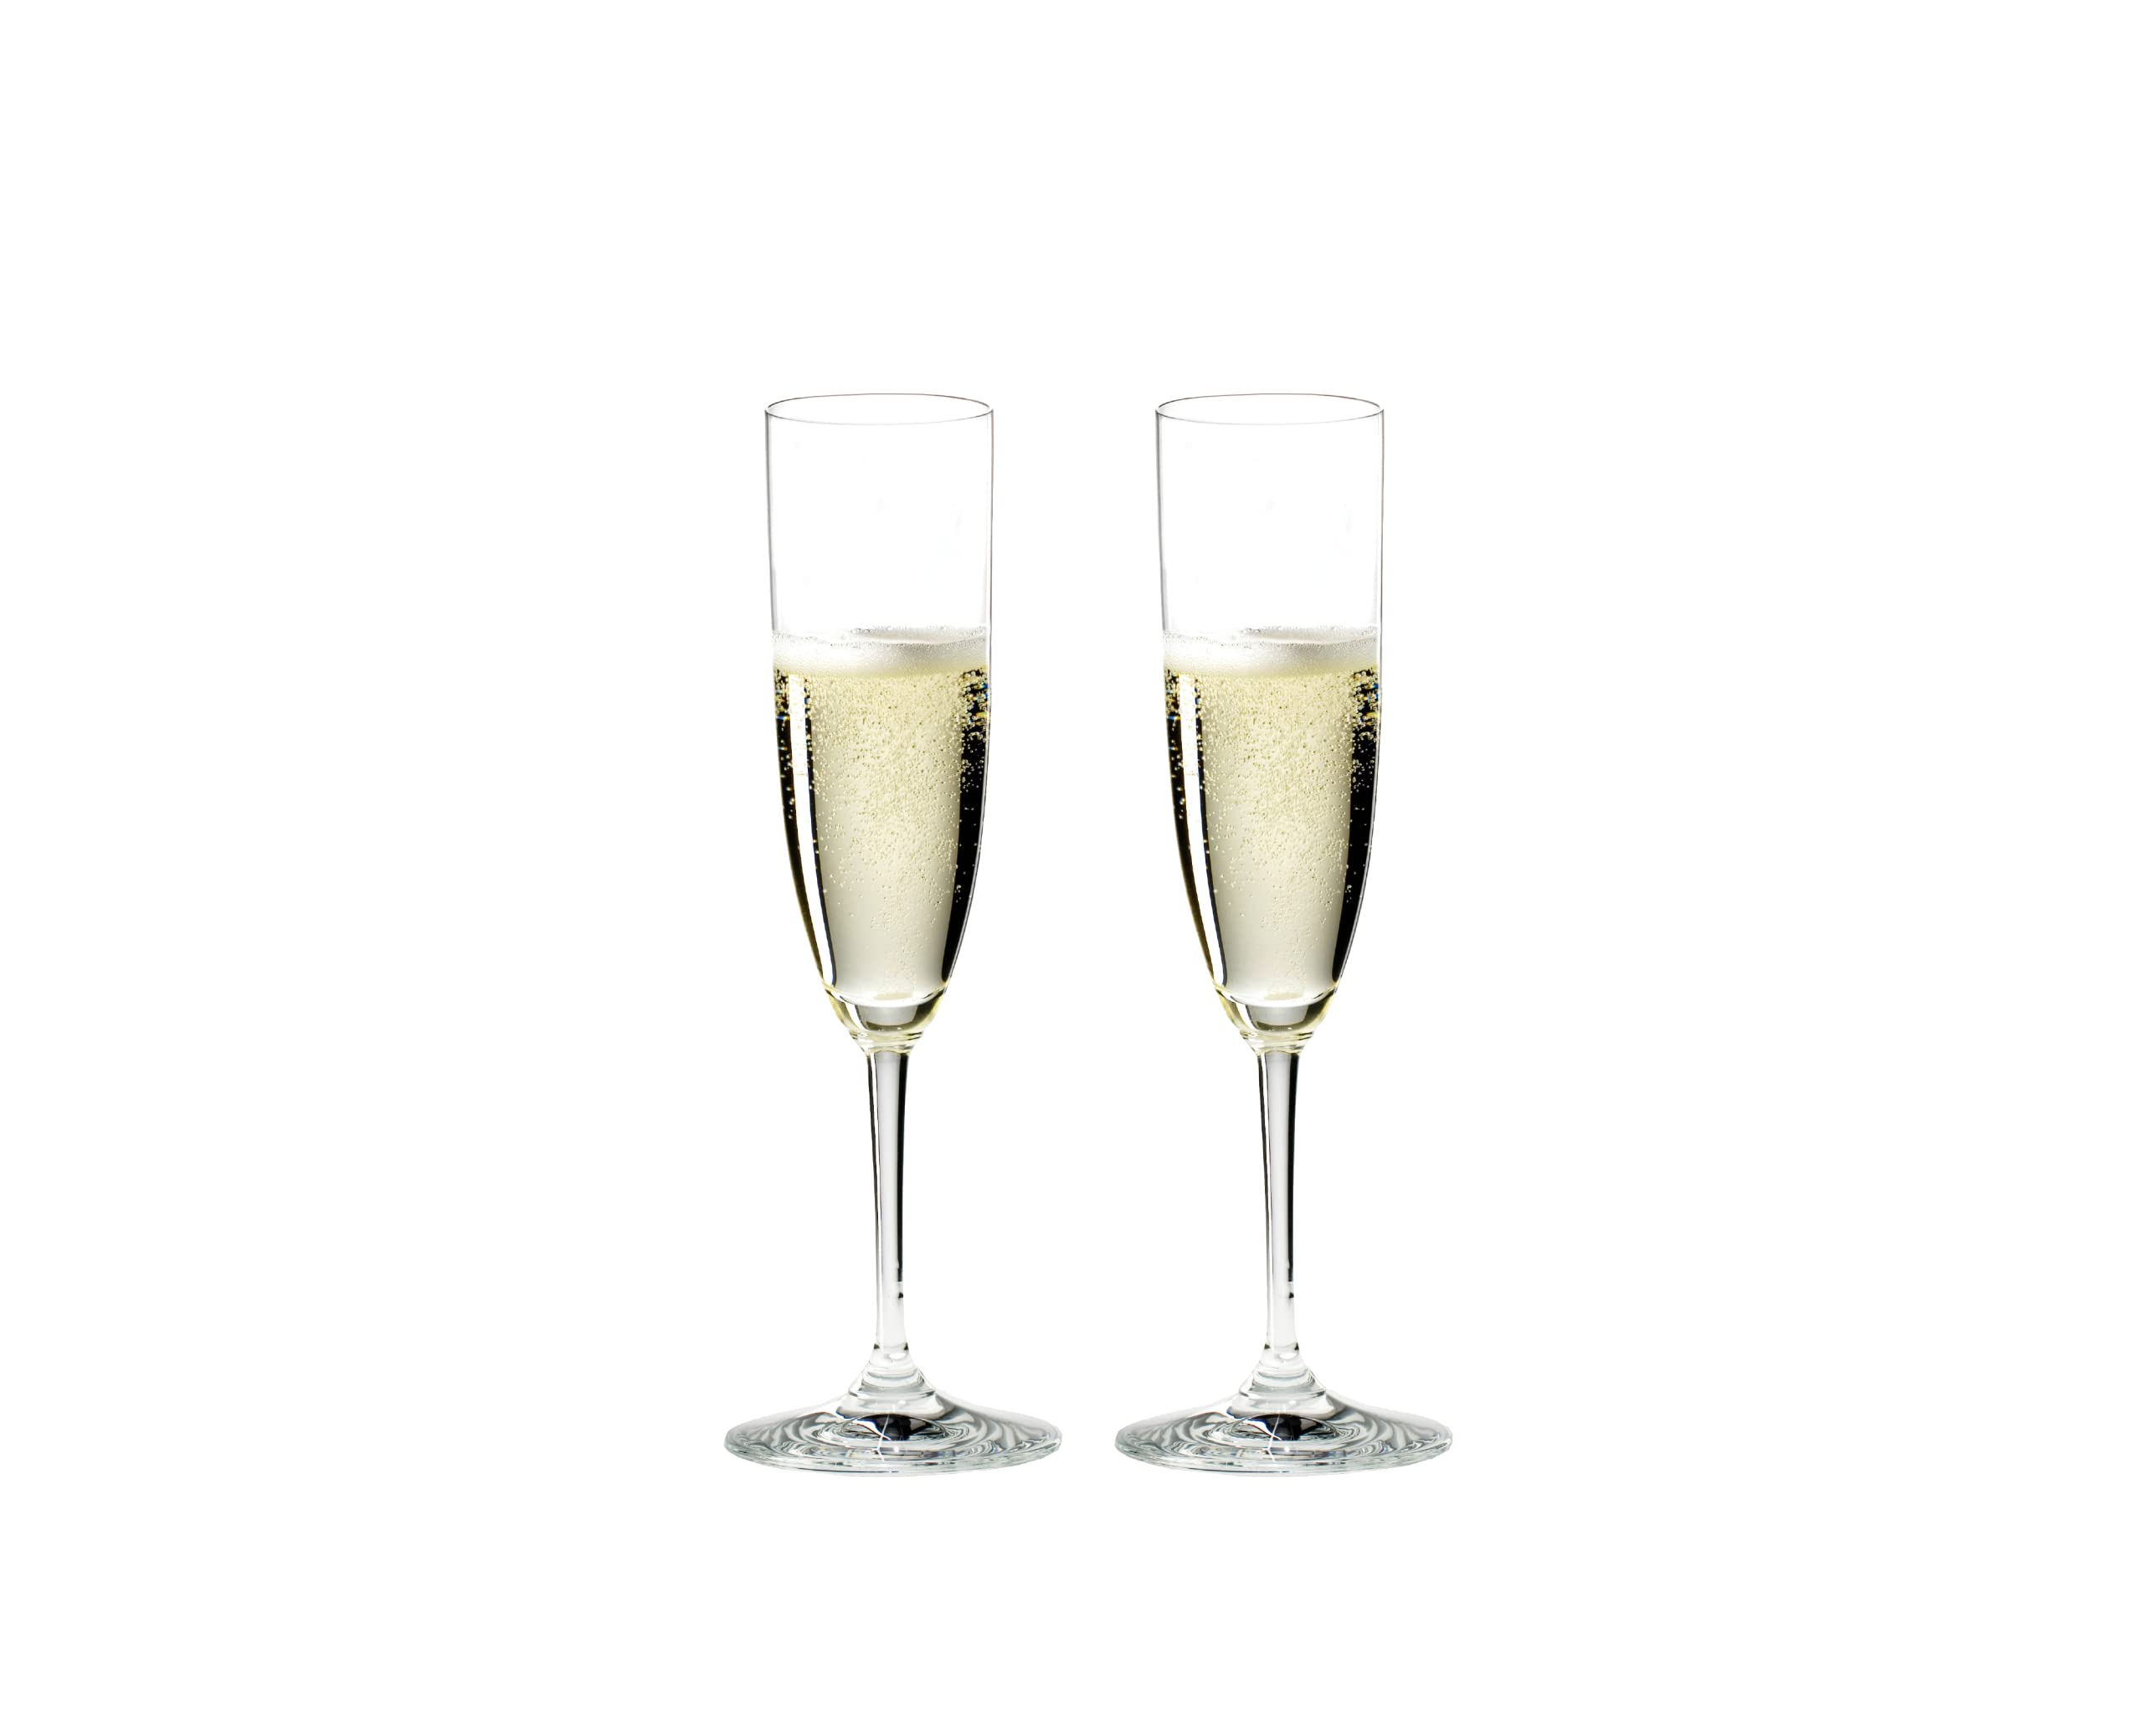 RIEDEL 6416/08 Vinum Champagner Flöte, 2-teiliges Champagnerflöten Set, Kristallglas